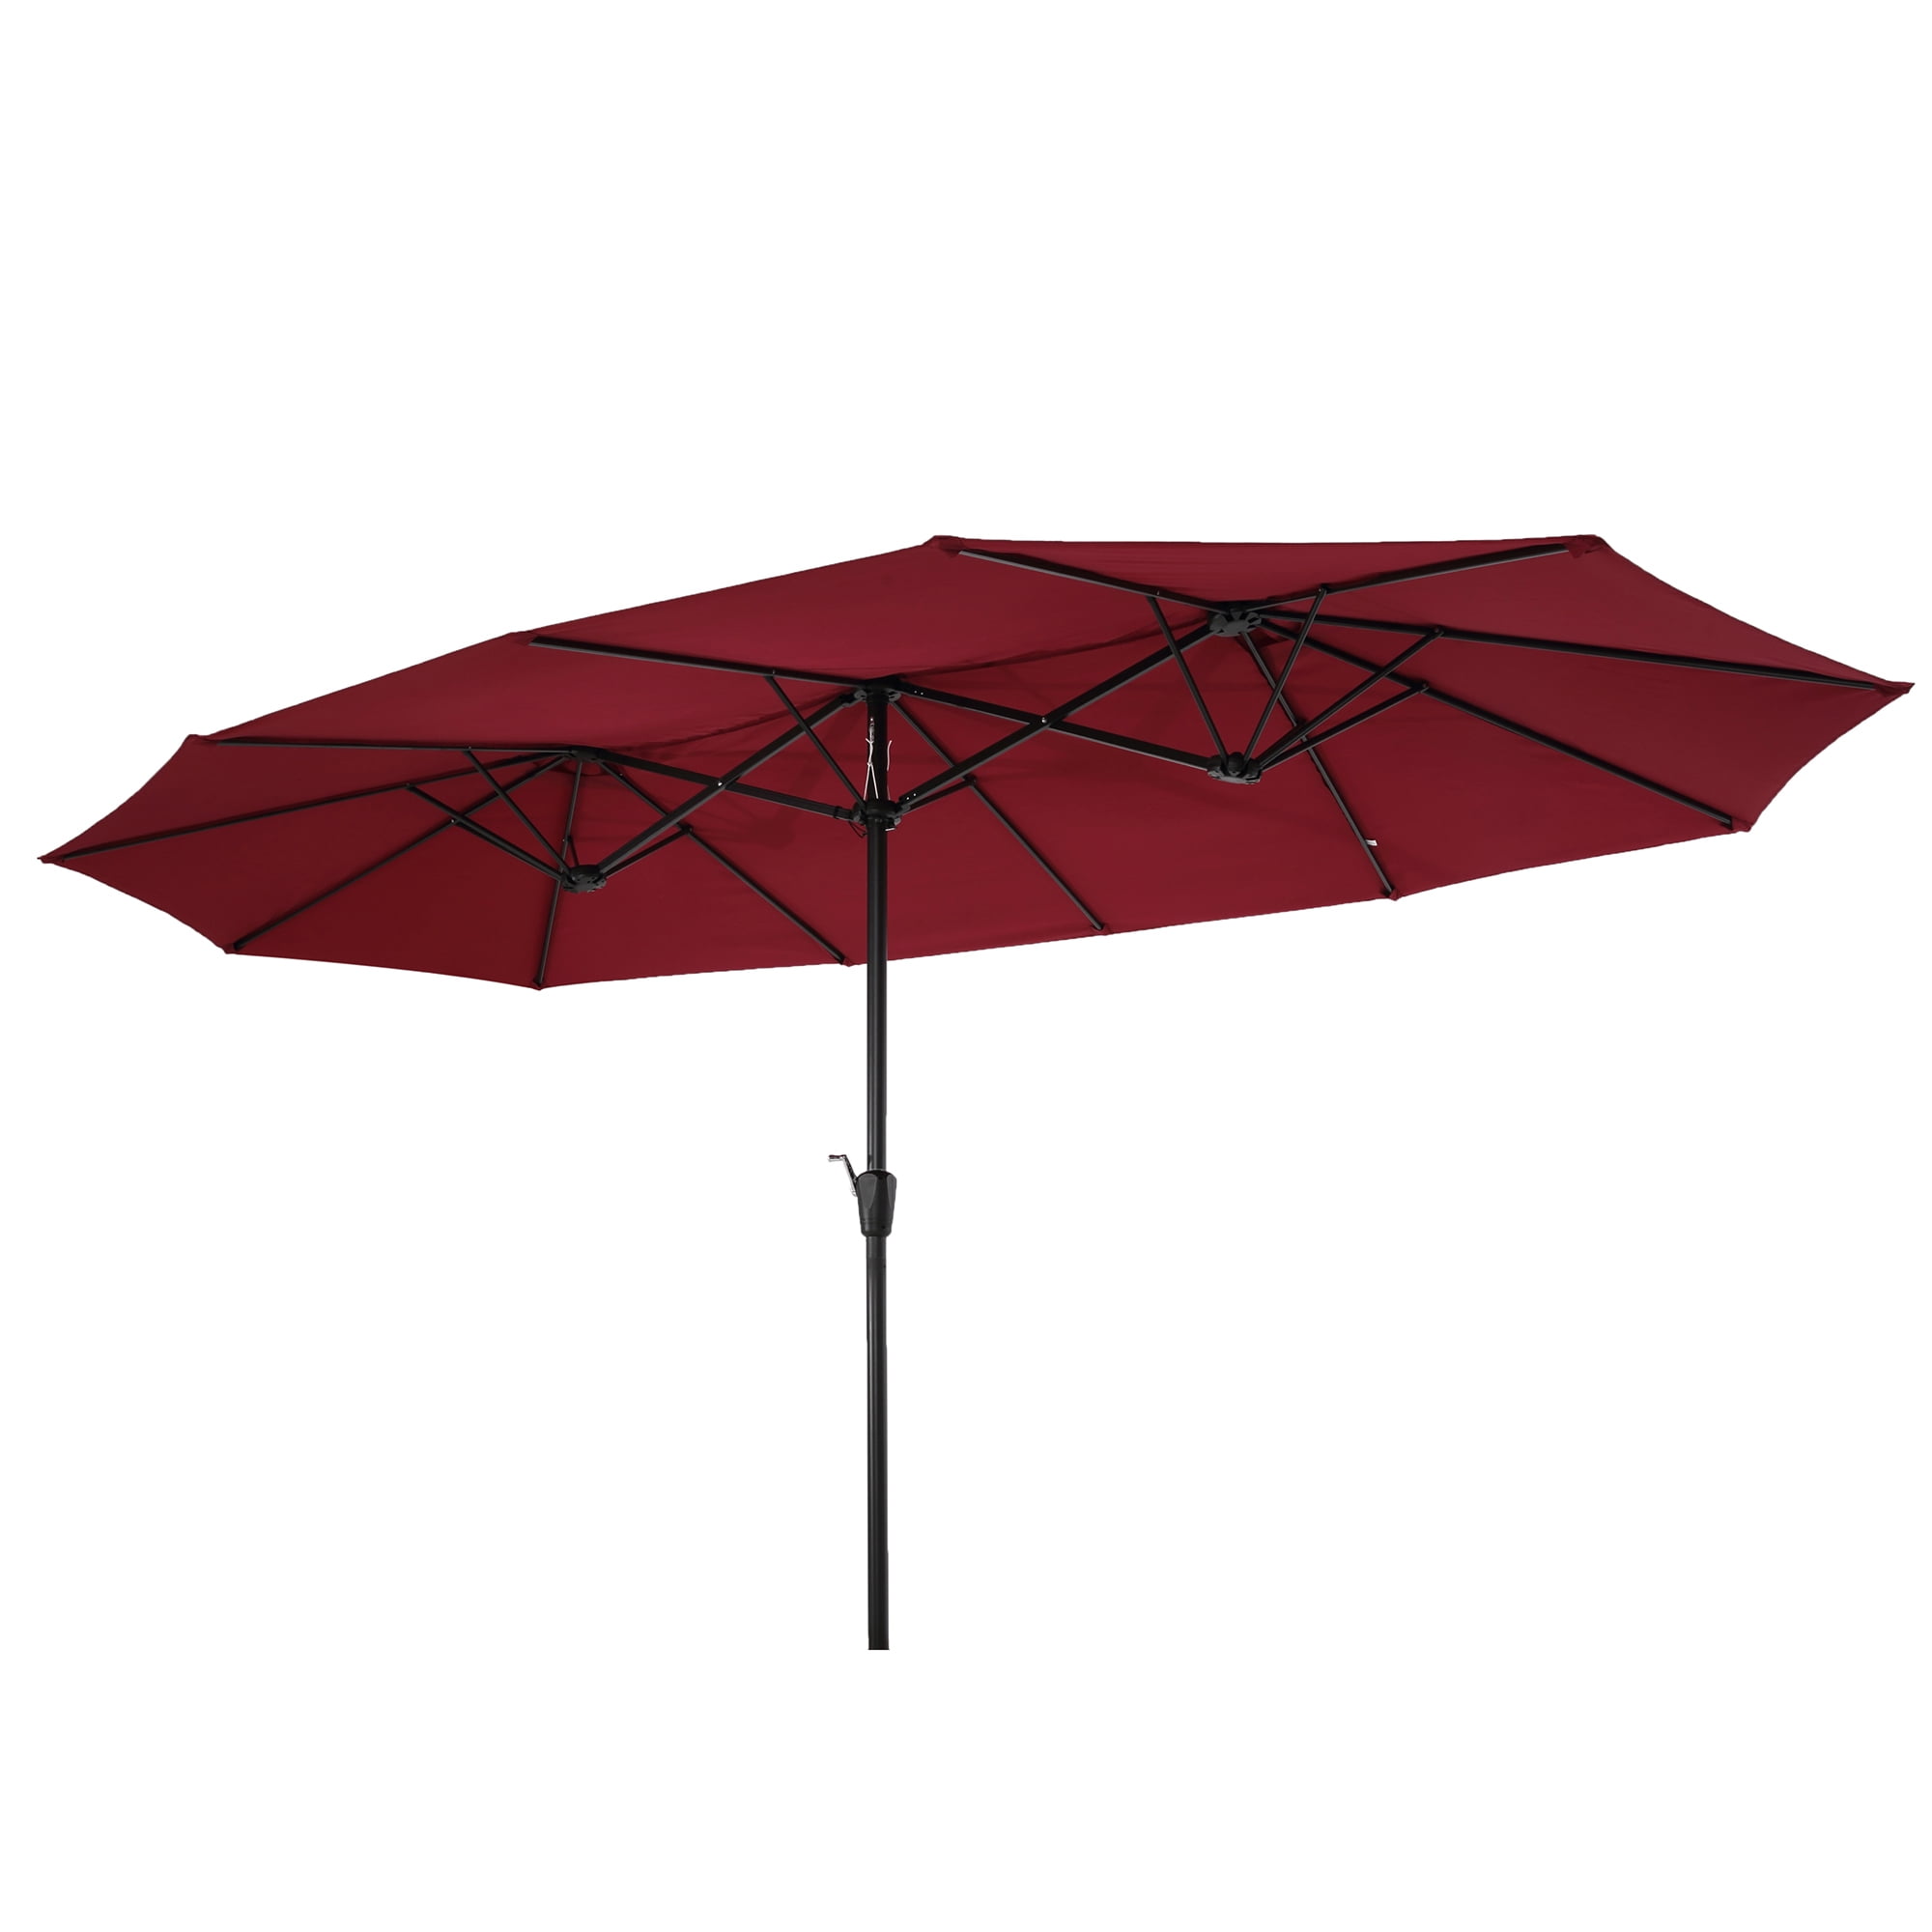 190x96cm Parasol Umbrella Green Cover Outdoor Garden Patio Shield Waterproof p 